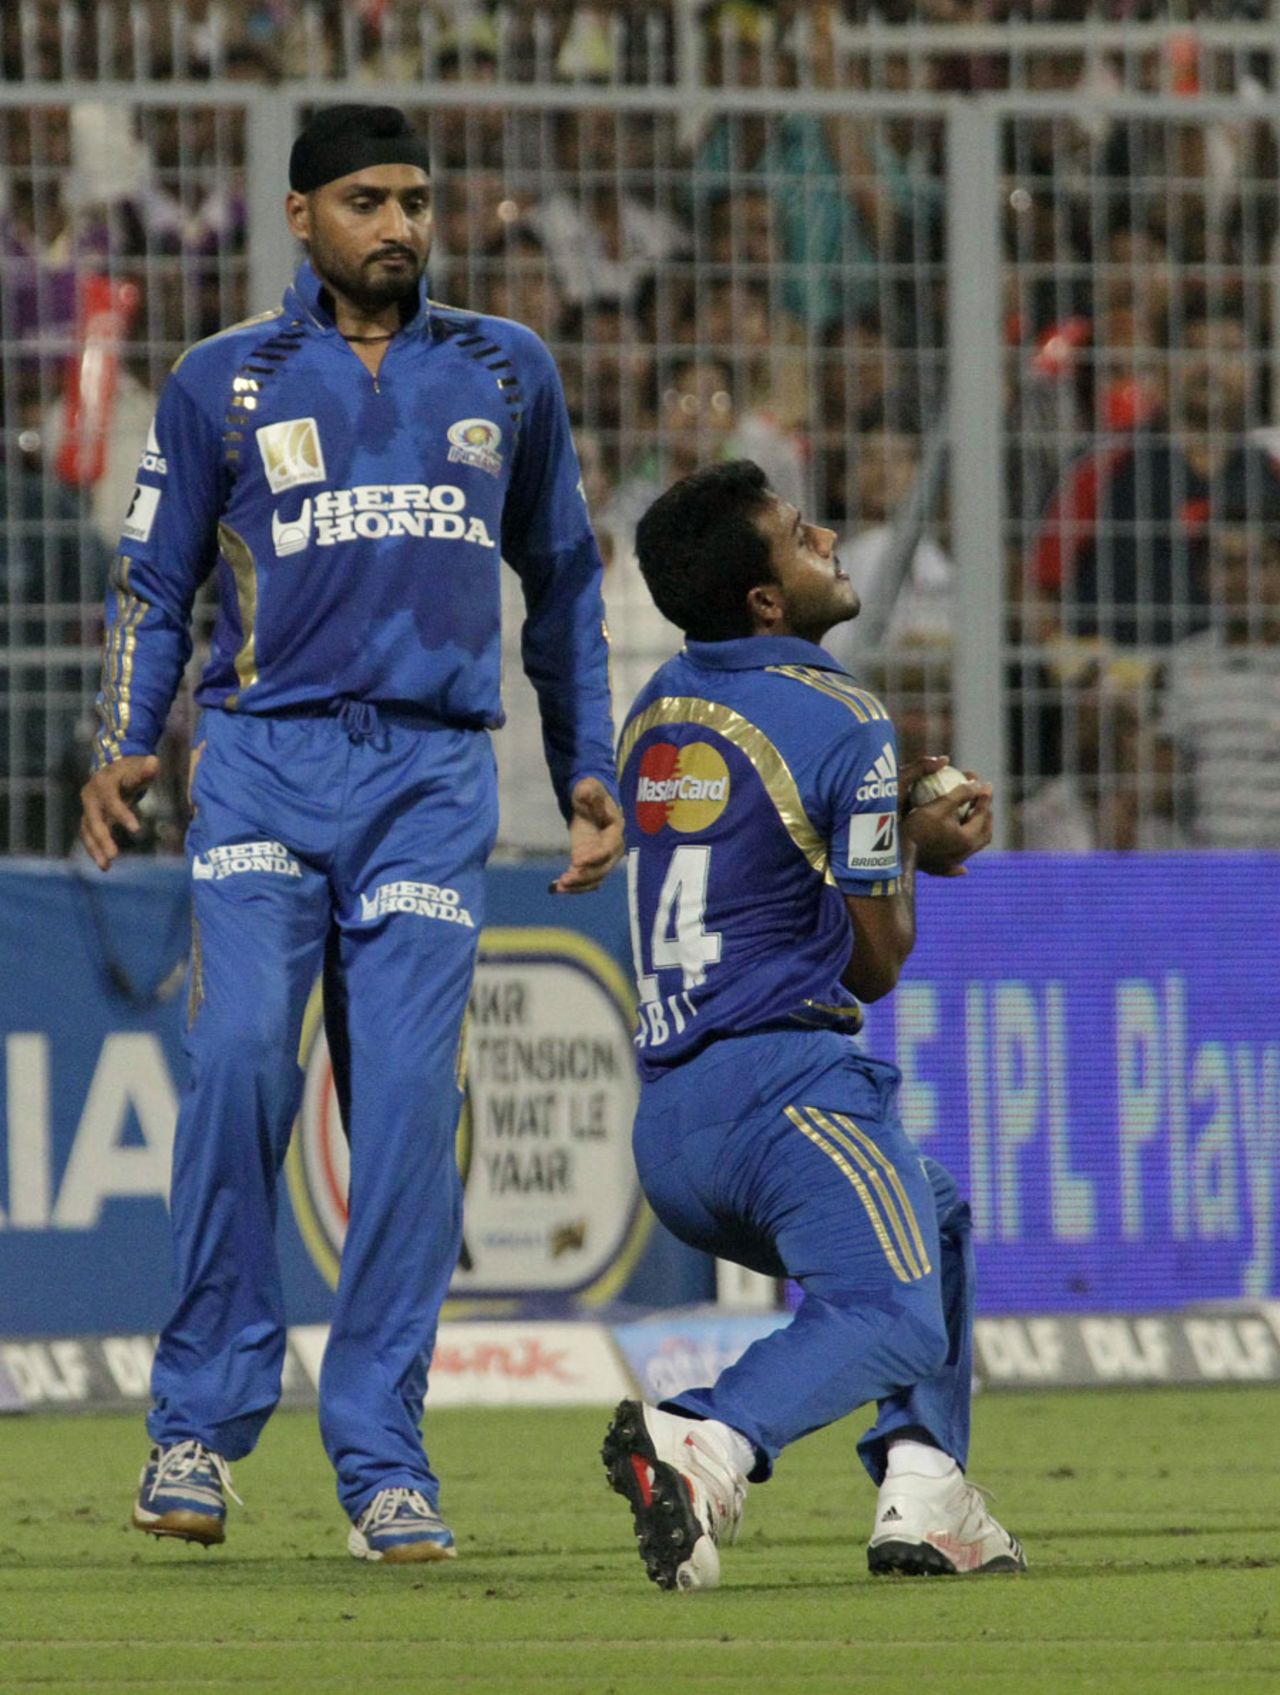 Abu Nechim takes a catch to send Yusuf Pathan back, Kolkata Knight Riders v Mumbai Indians, IPL 2011, May 22, 2011